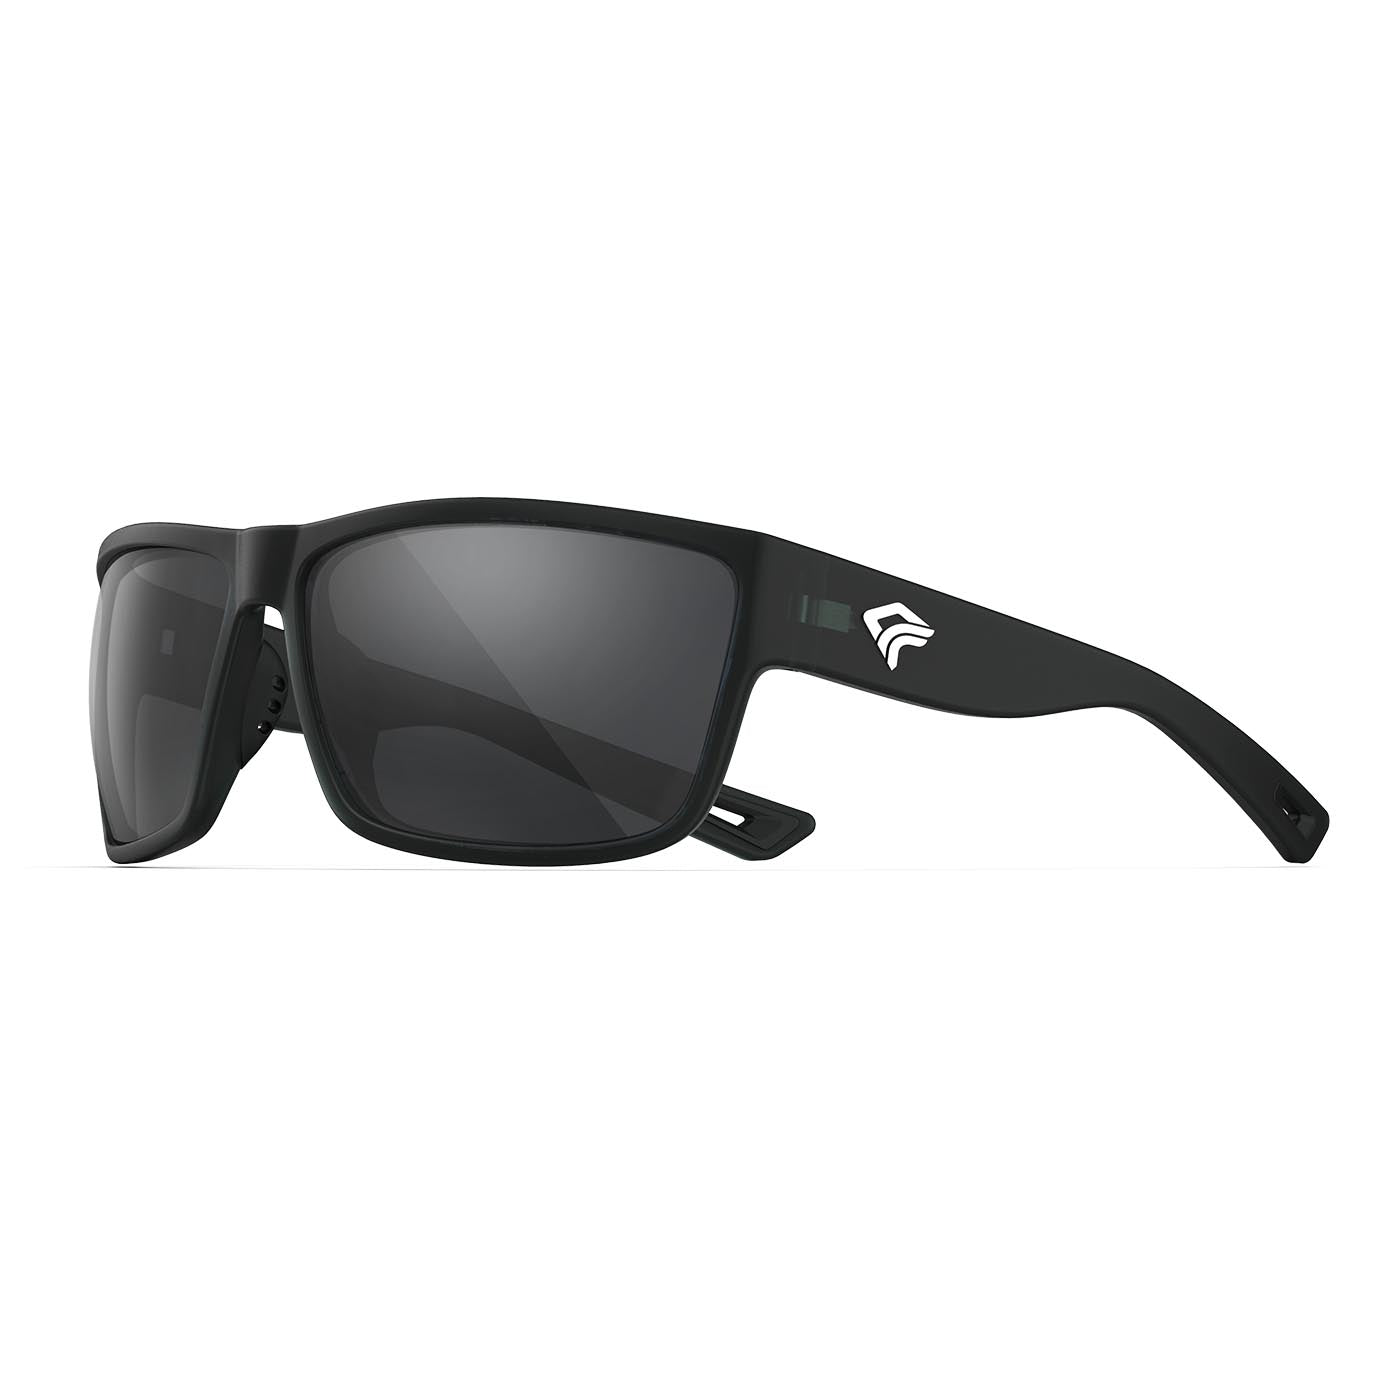 Romantic Polarized Sunglasses - Matte Black Frame & Black Mirror Lens